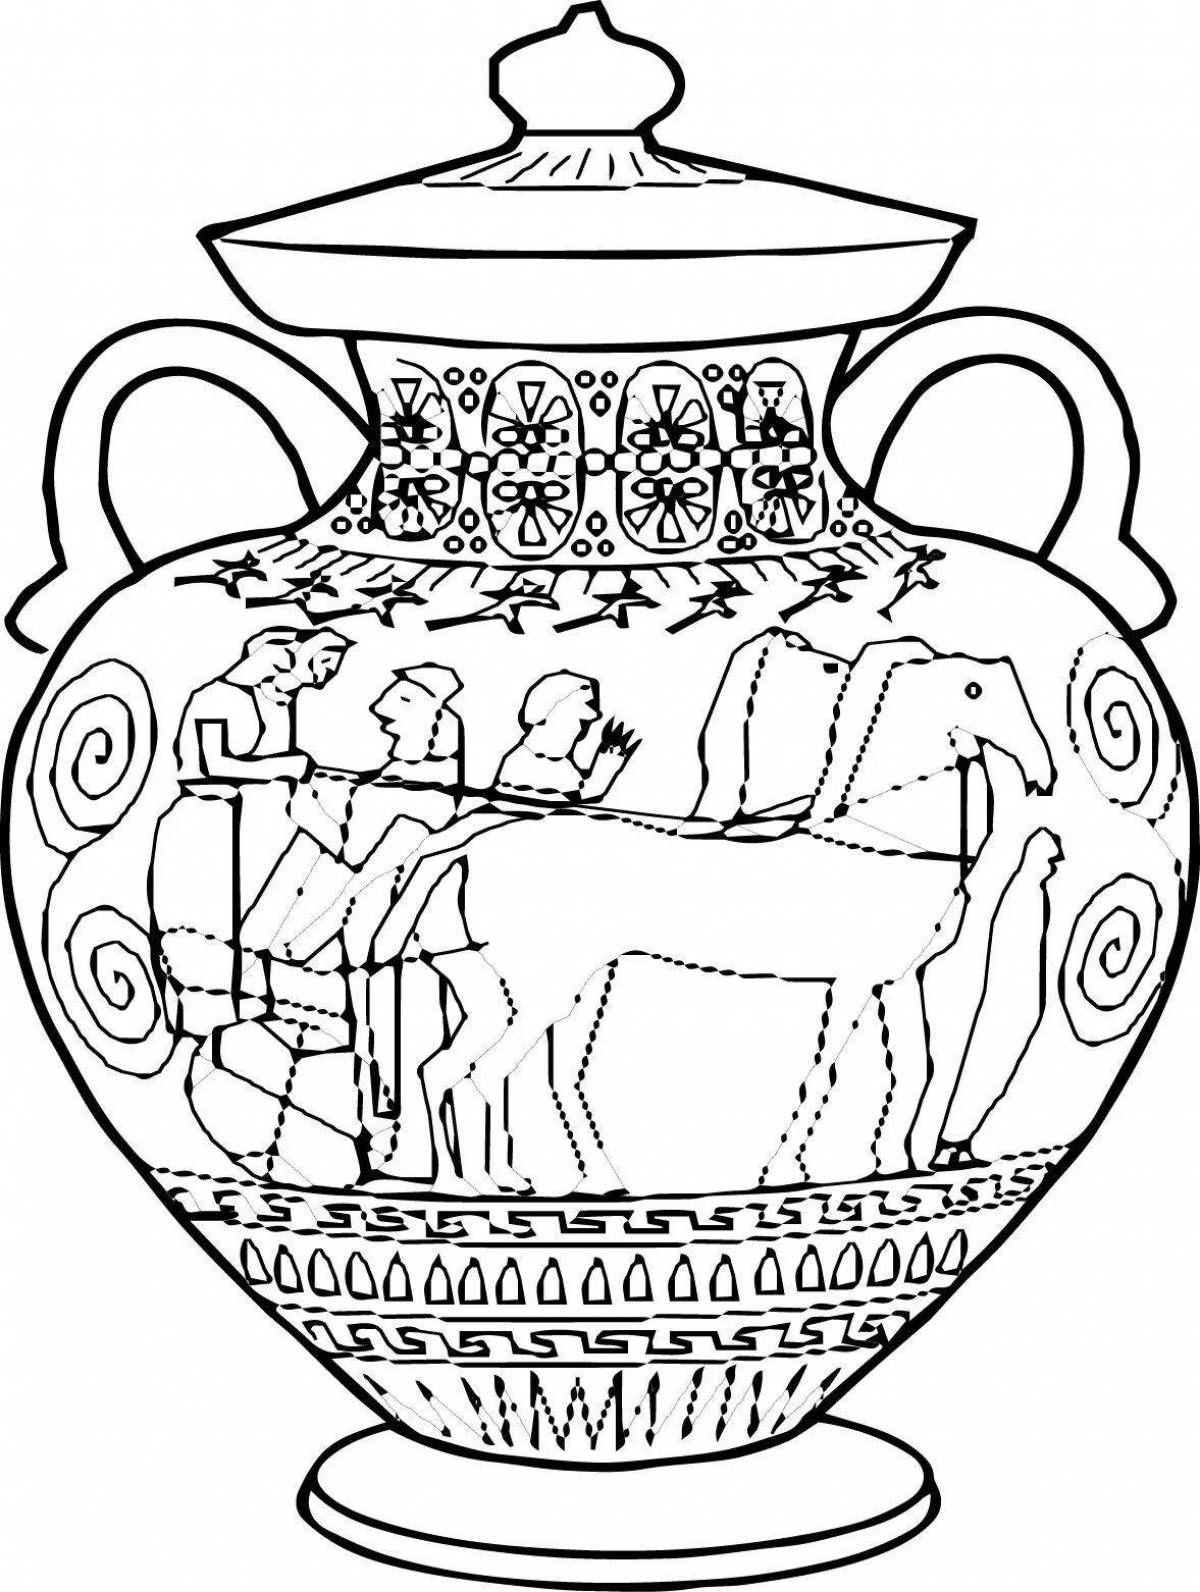 Colouring colorful Greek vase